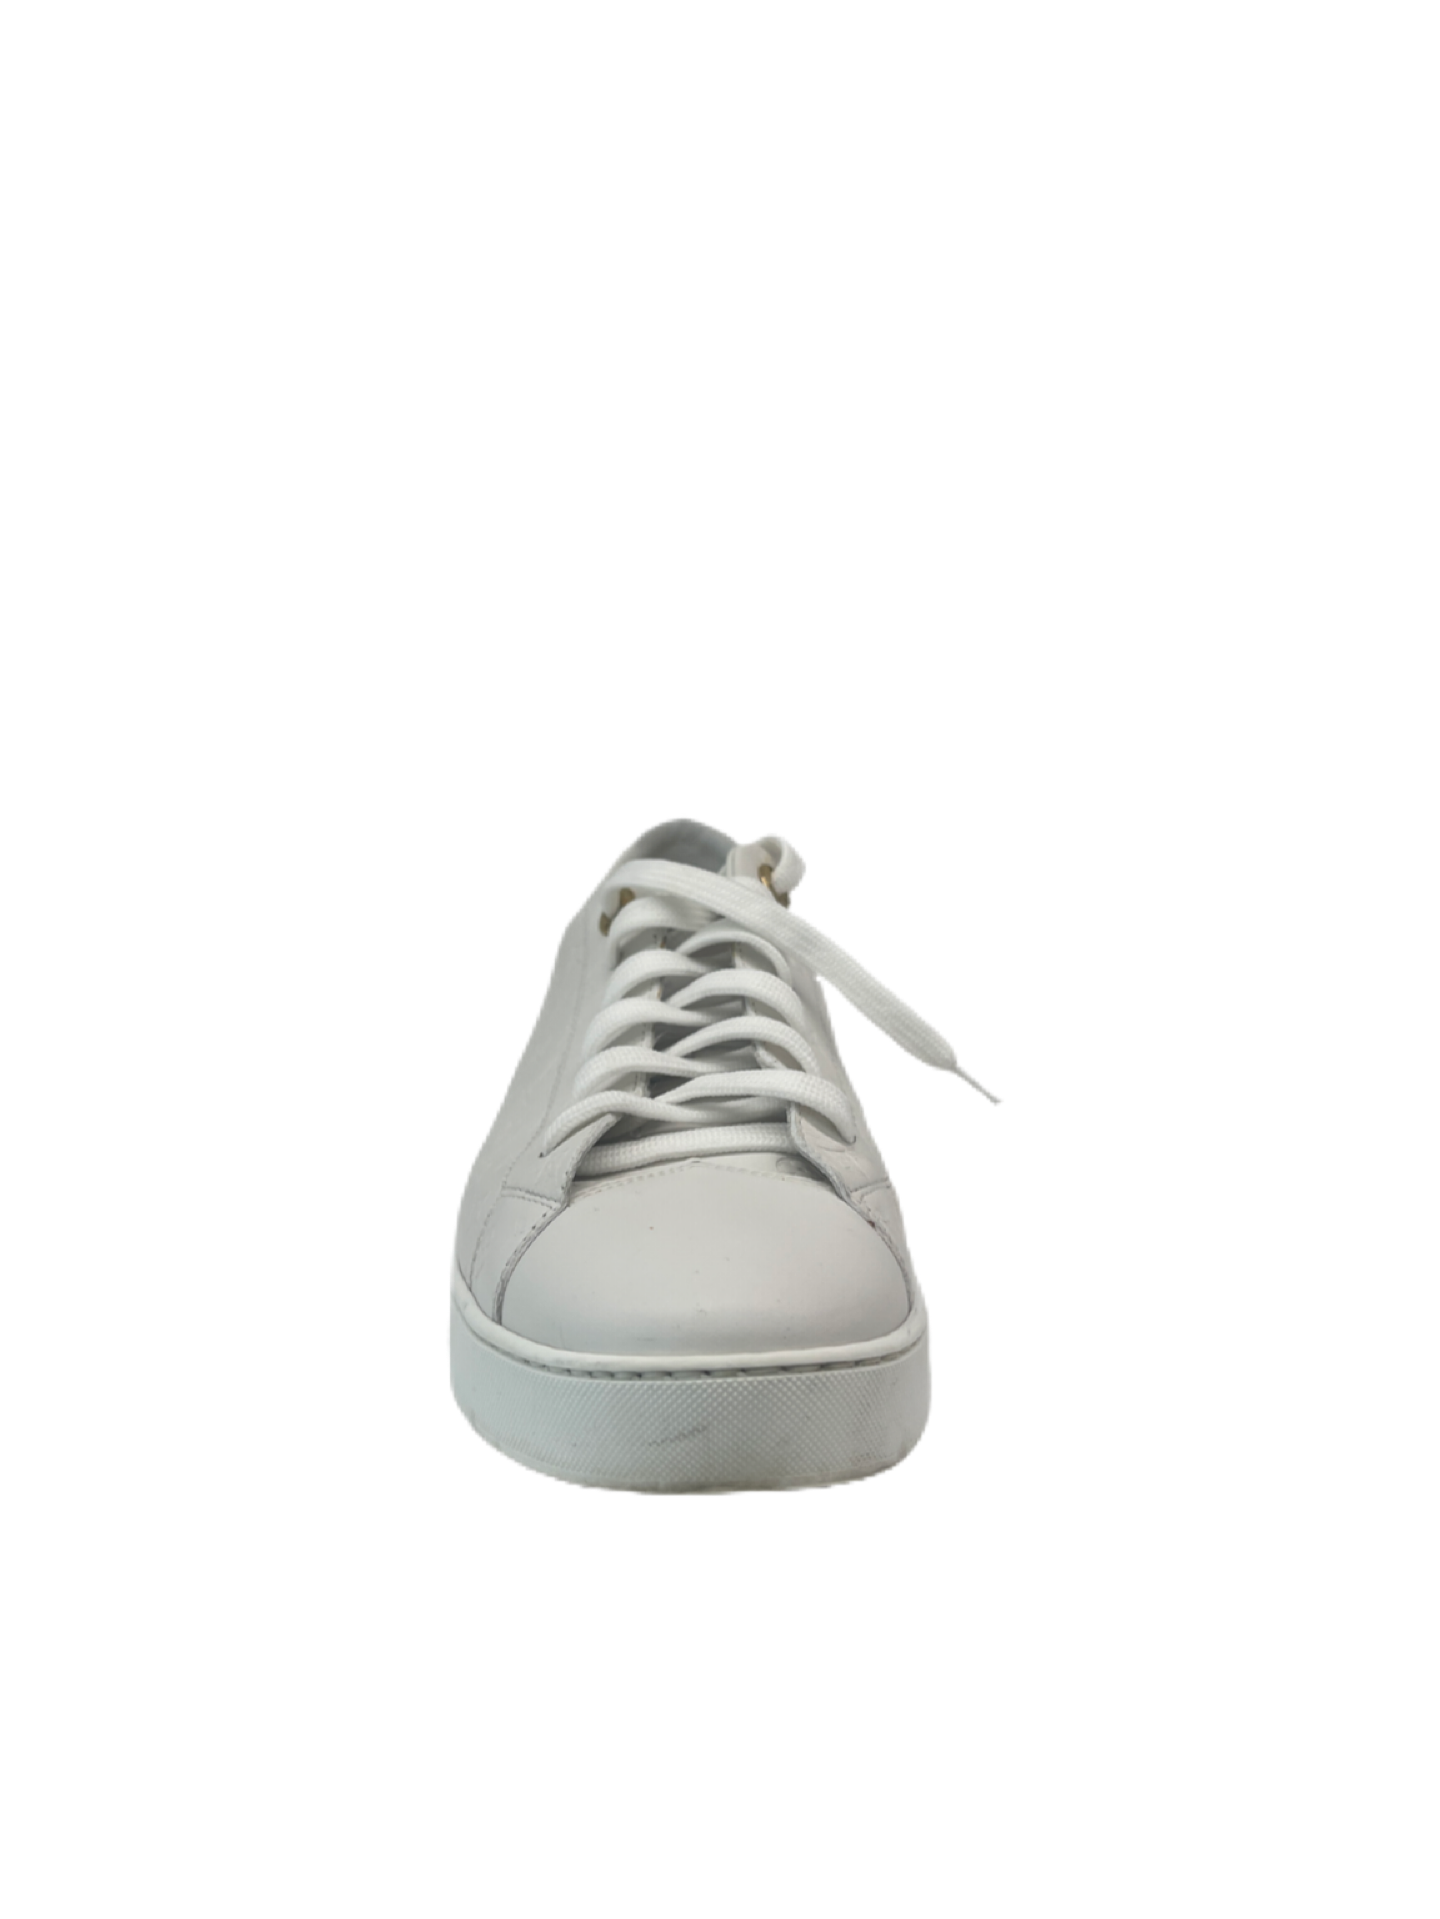 Louis Vuitton White Embossed Monogram Sneakers. Size: 38